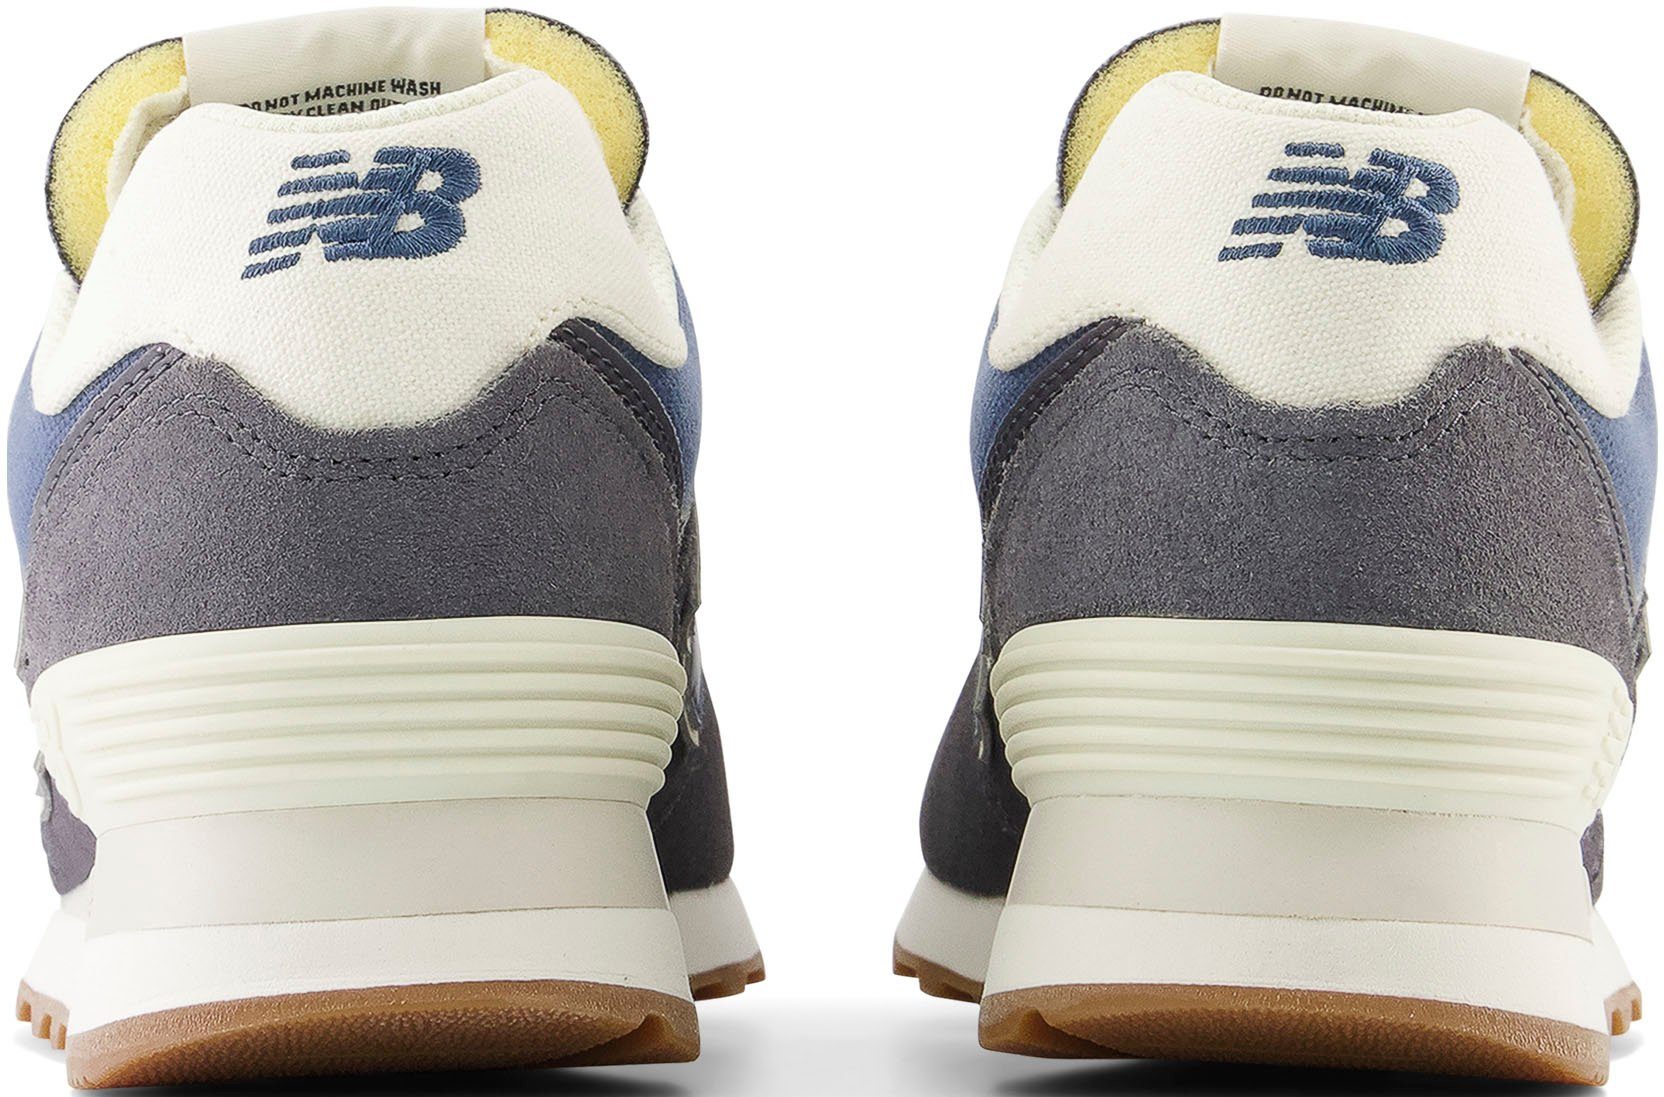 WL574 New Sneaker granite-blau Core Balance